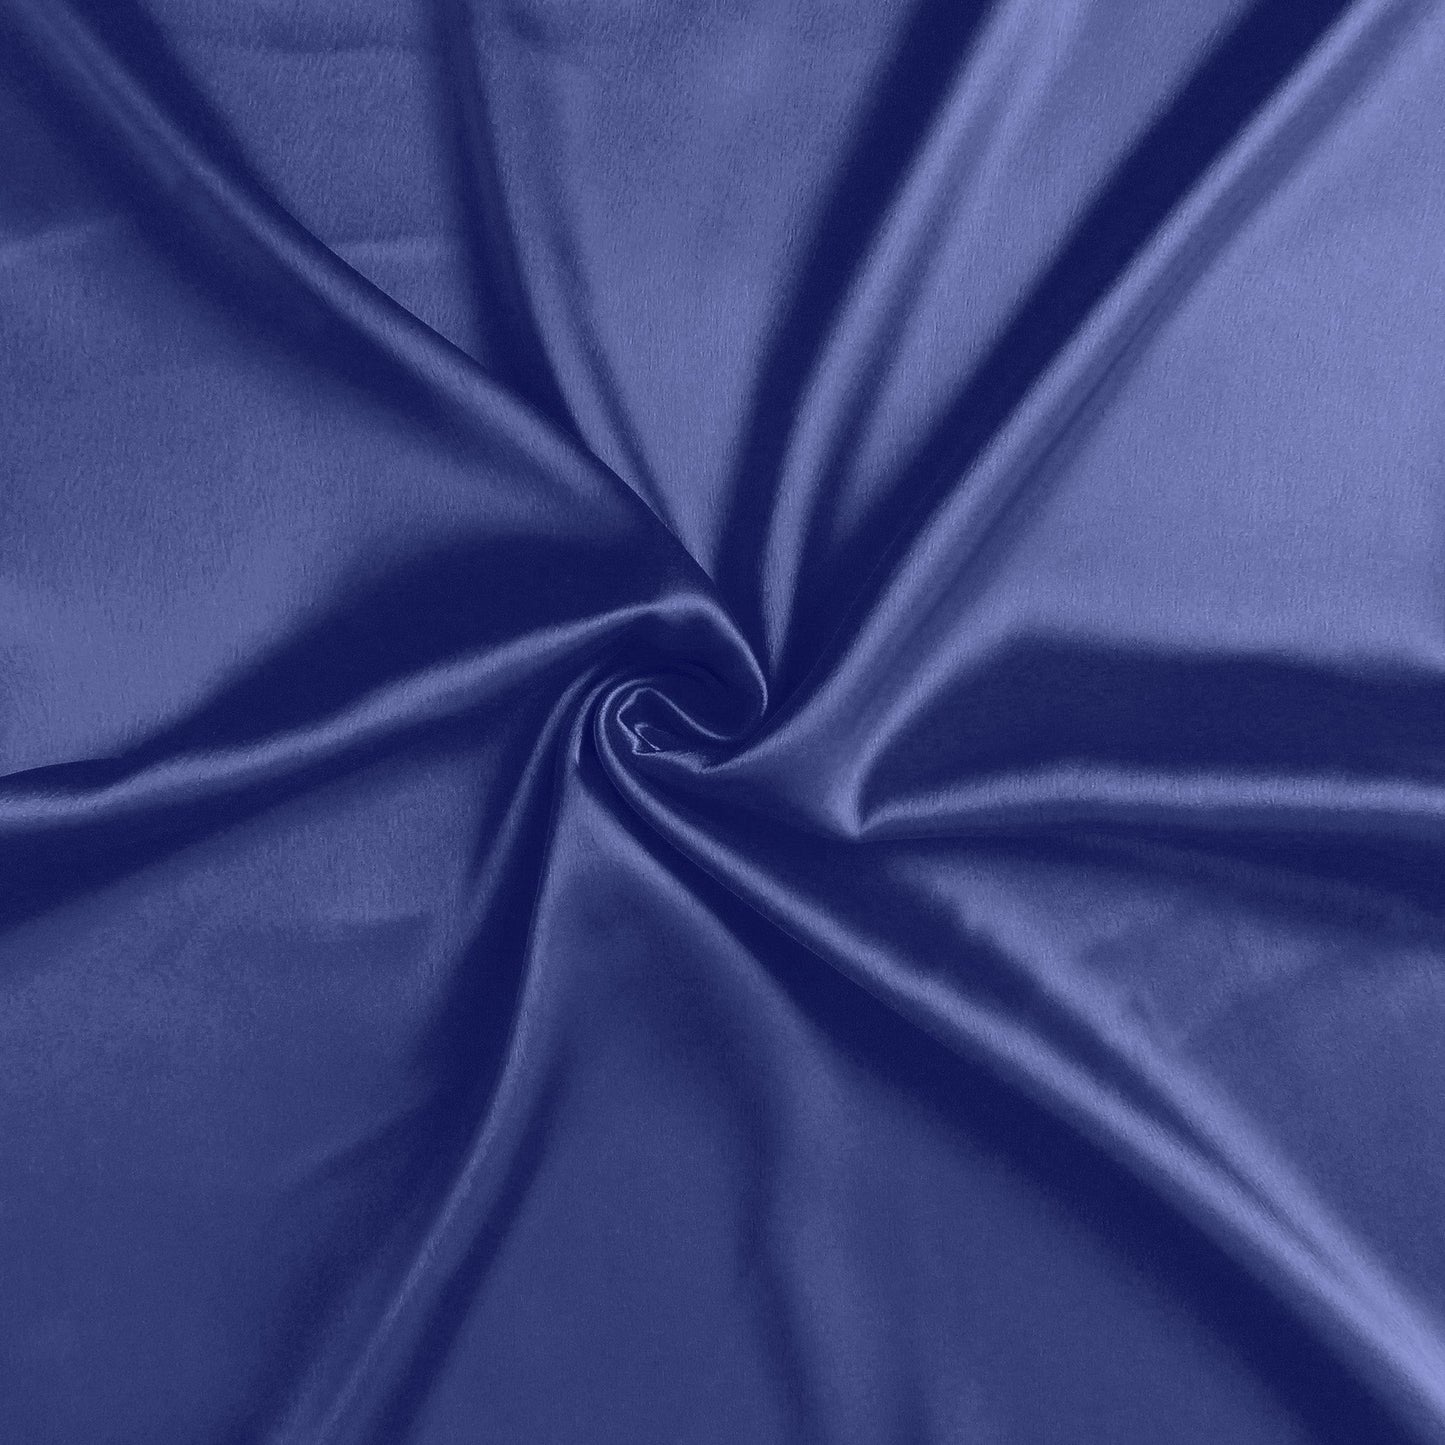 Luxury Soft Plain Satin Silk Pillowcases in Set of 2 - Navy Blue